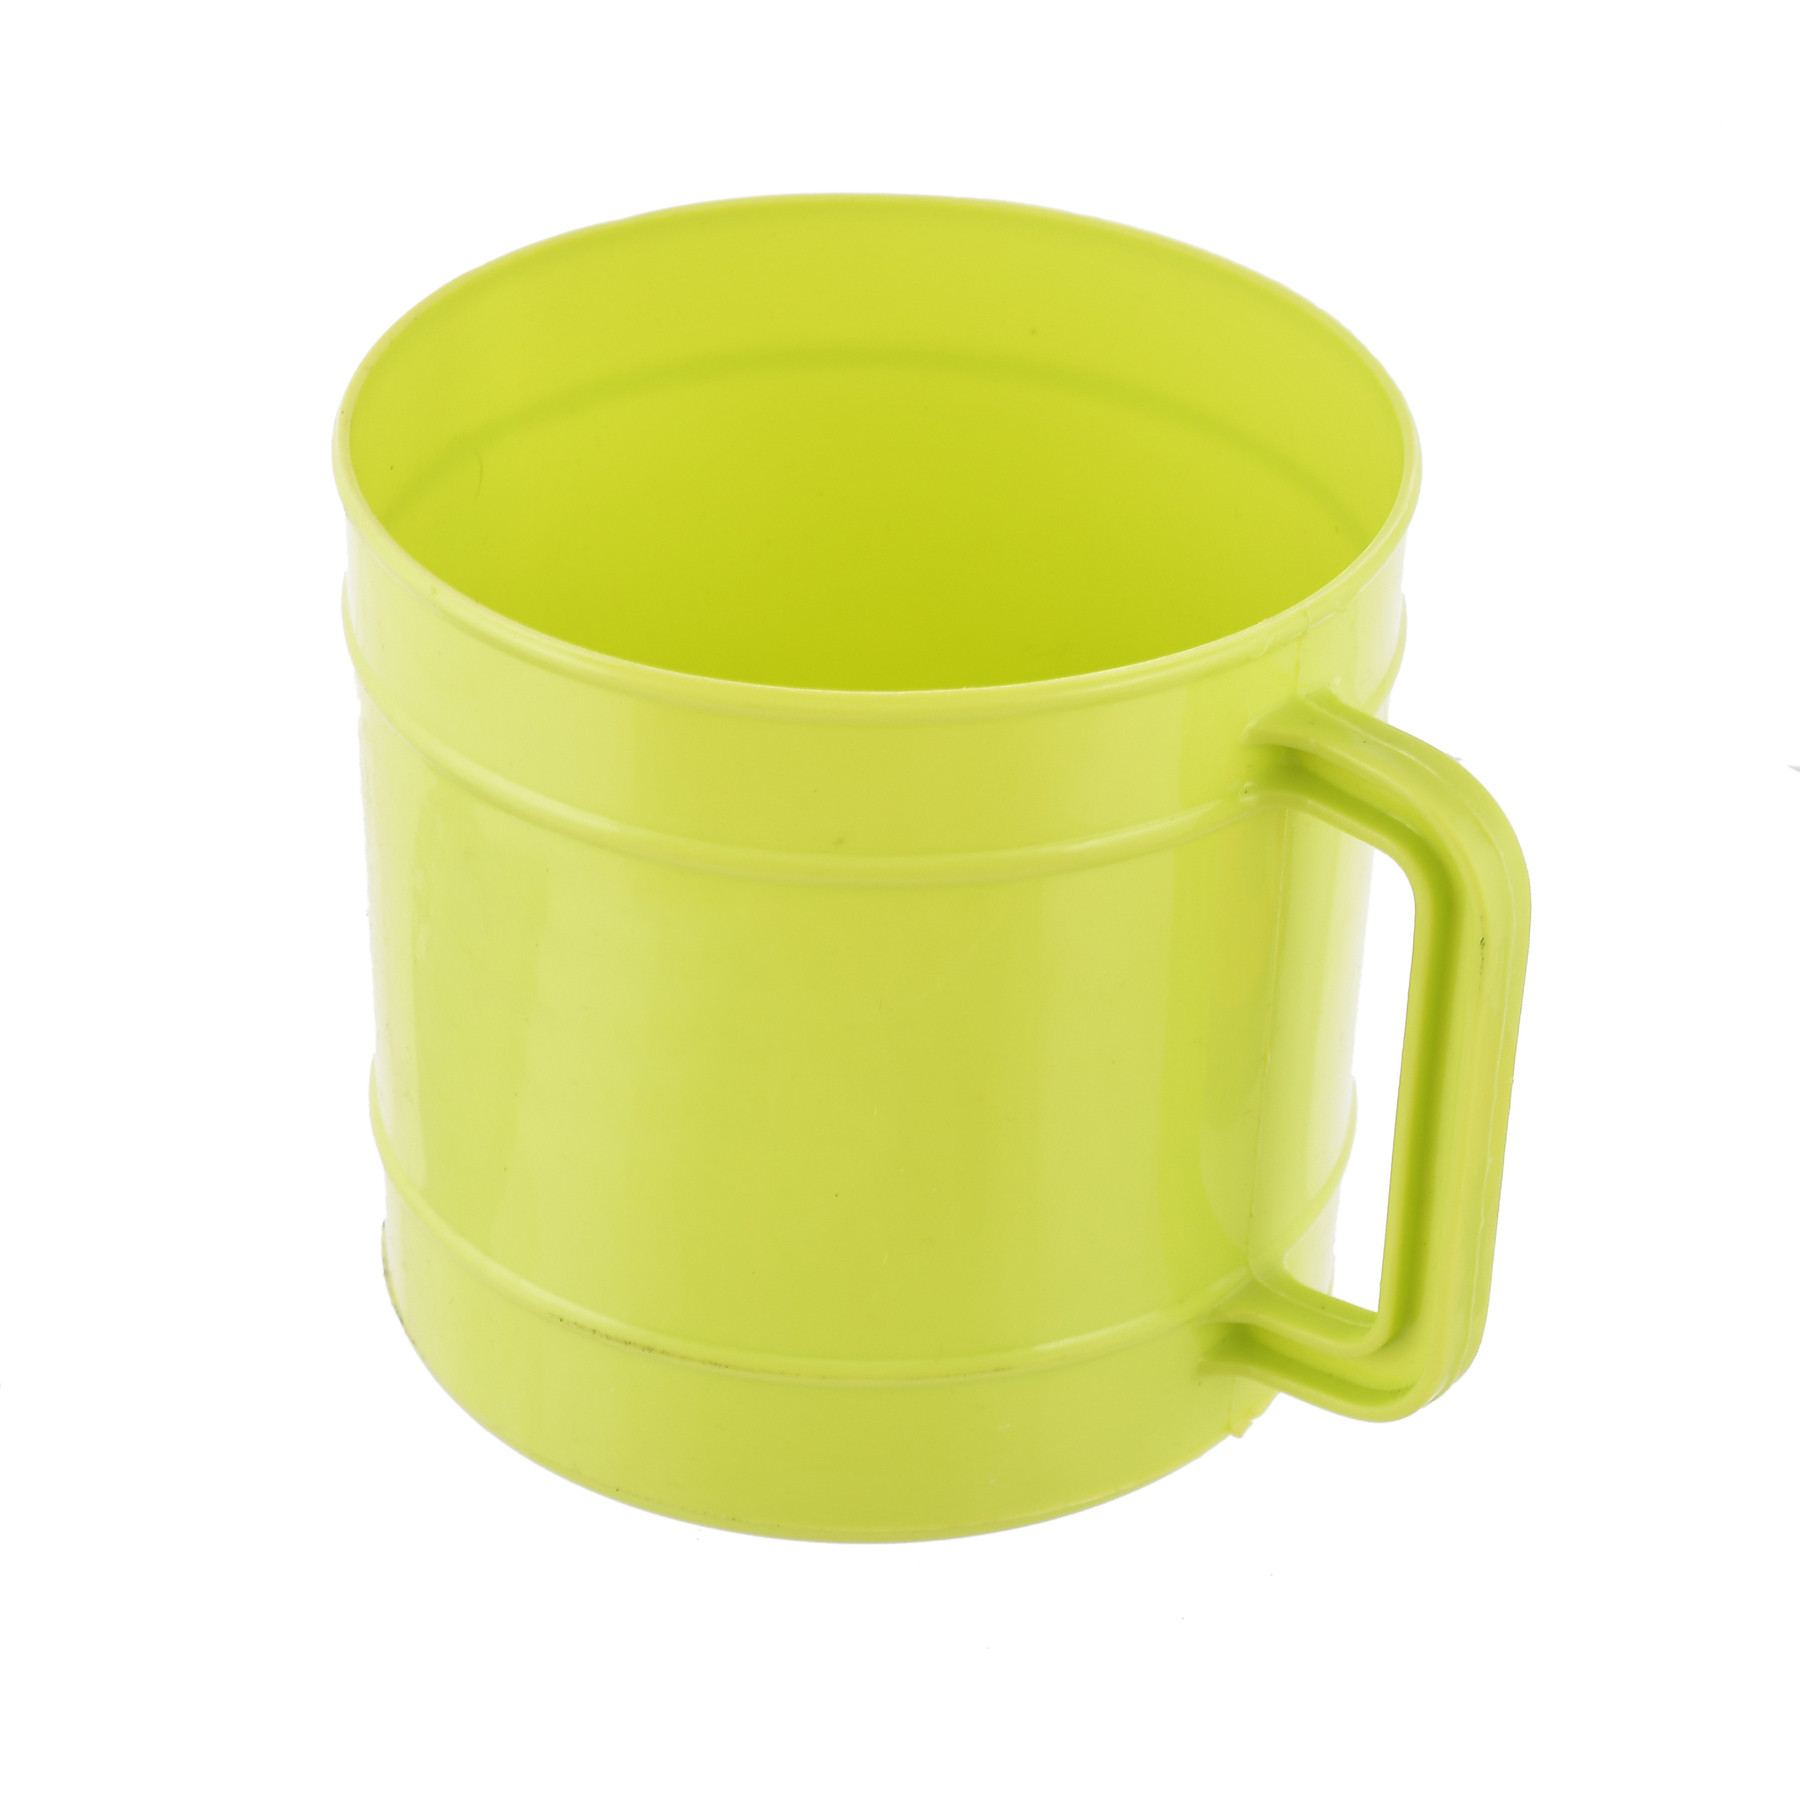 Kuber Industries Plastic Bathroom Mug, 1 Ltr., Pack of 6 (Green & Cream)